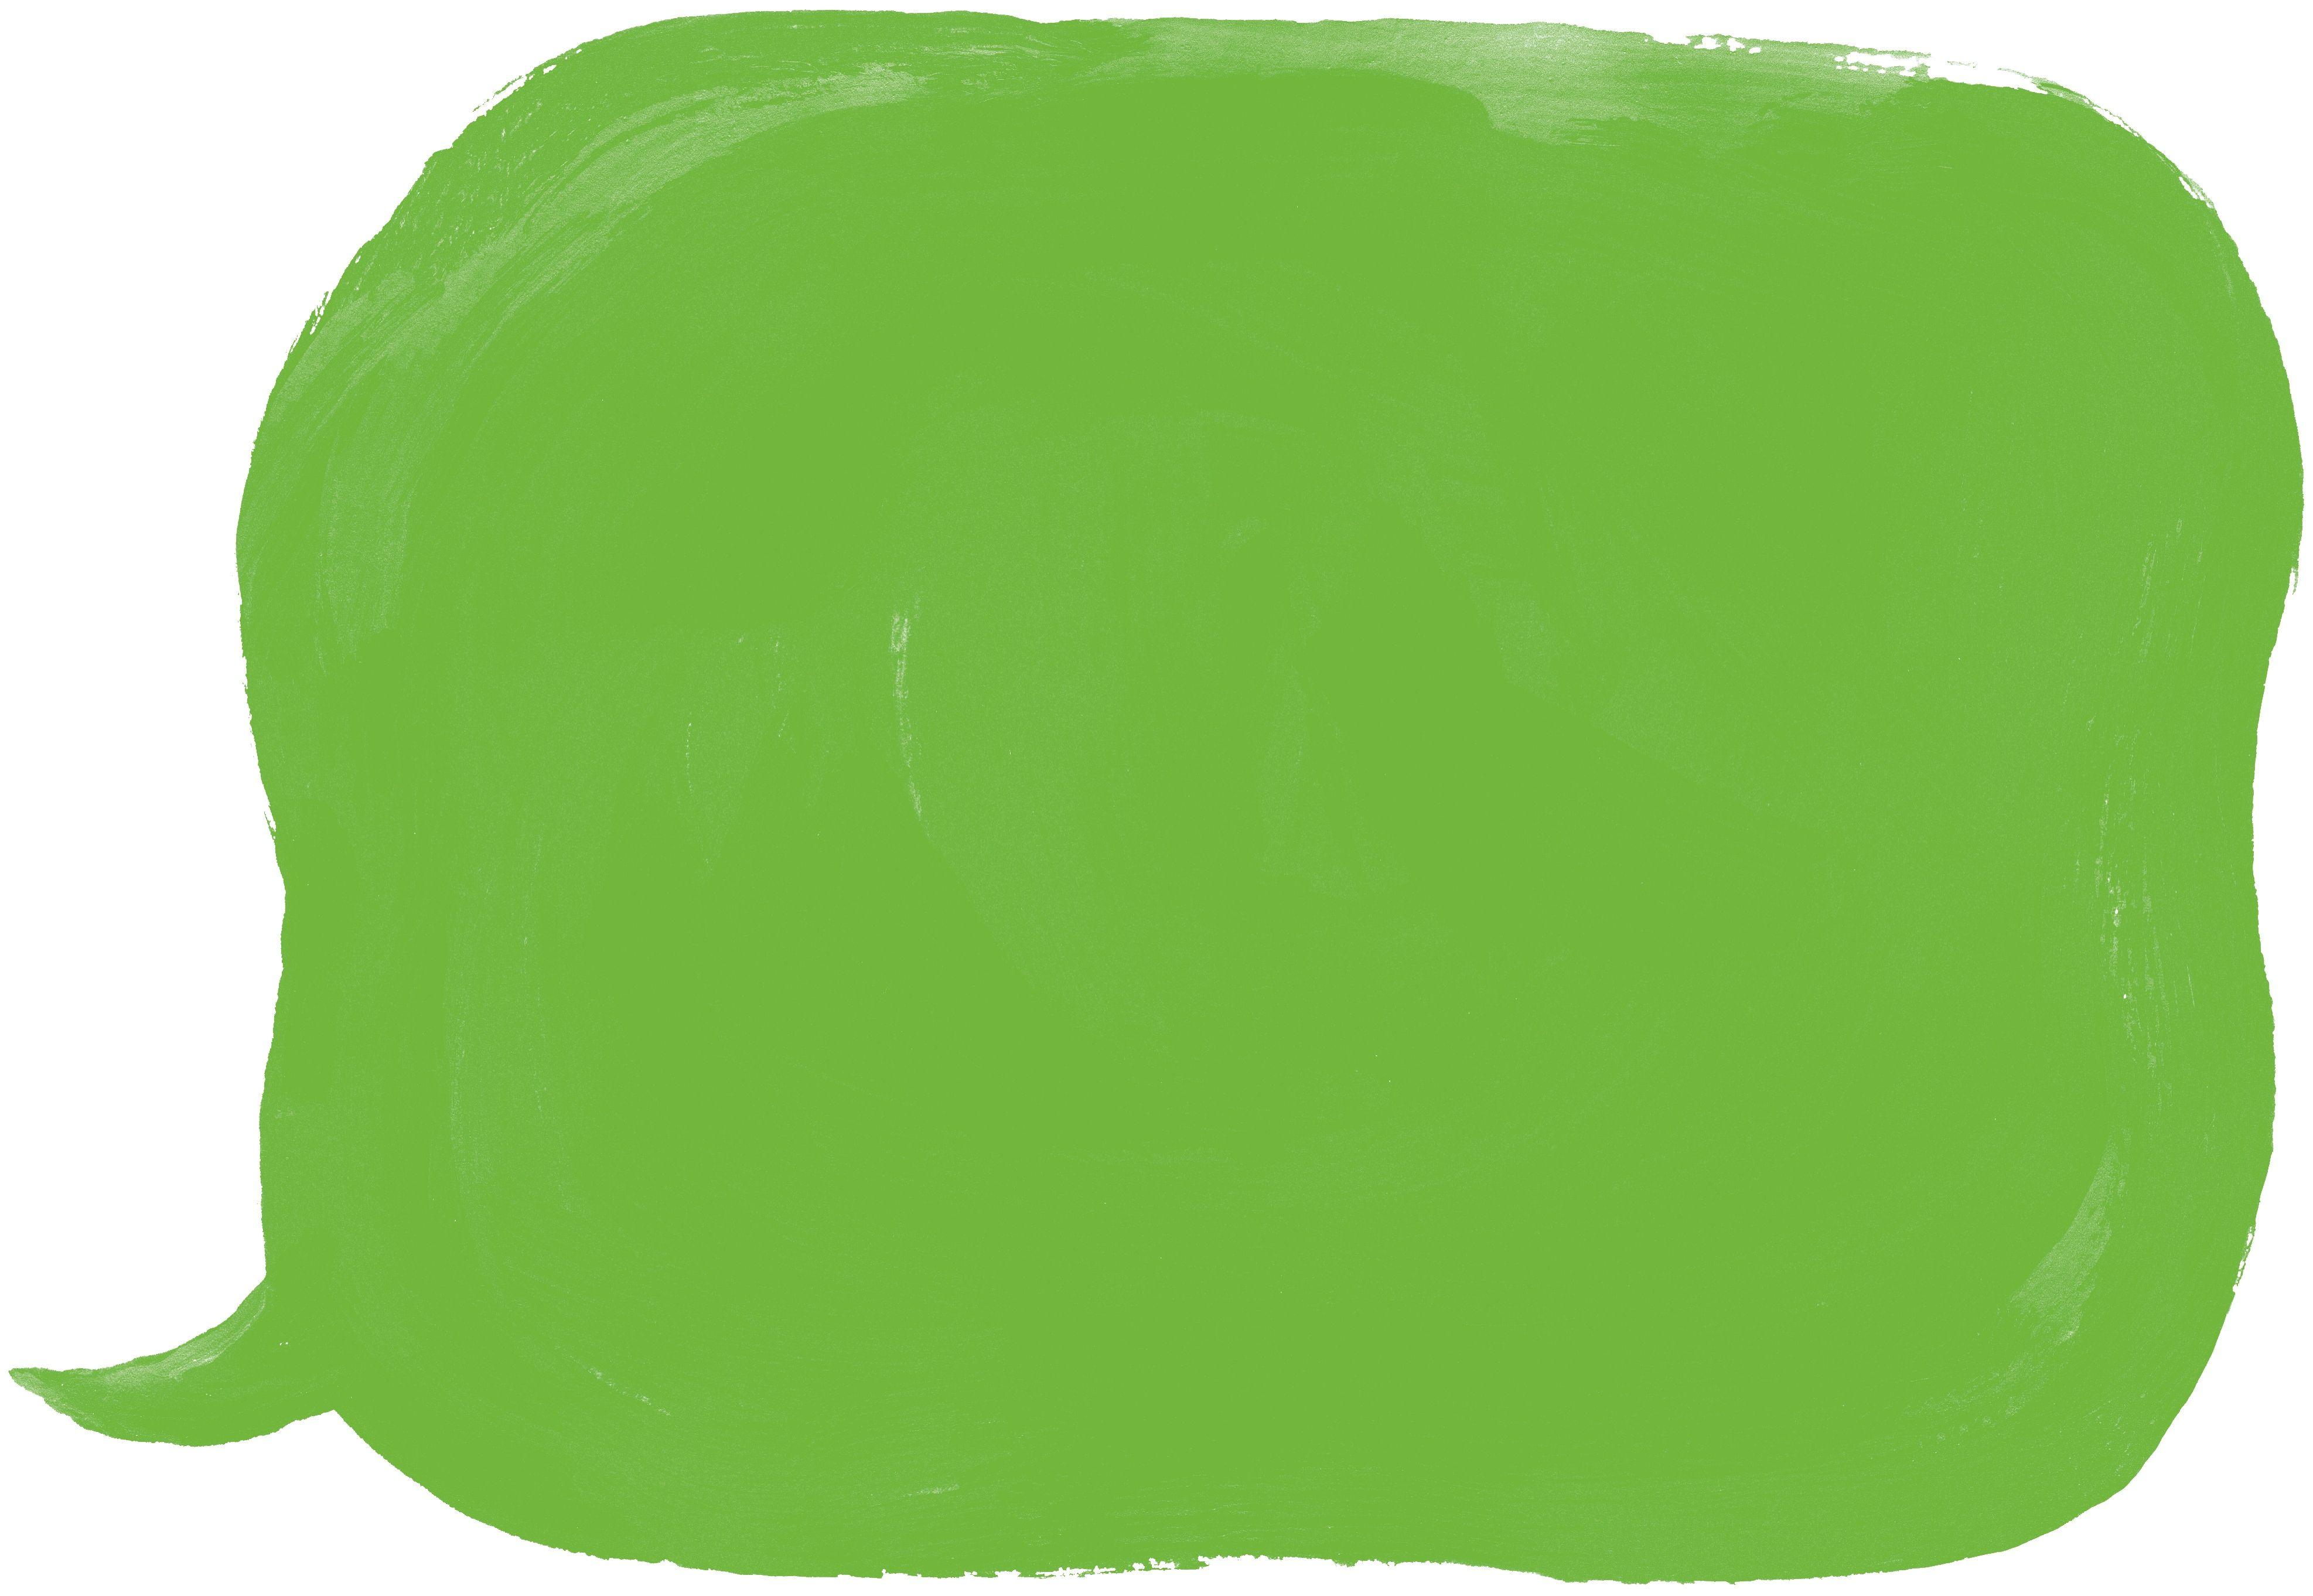 Green Message Bubble Logo - Brand Logo Green Speech Bubble - Eps Files - Clip Art Library